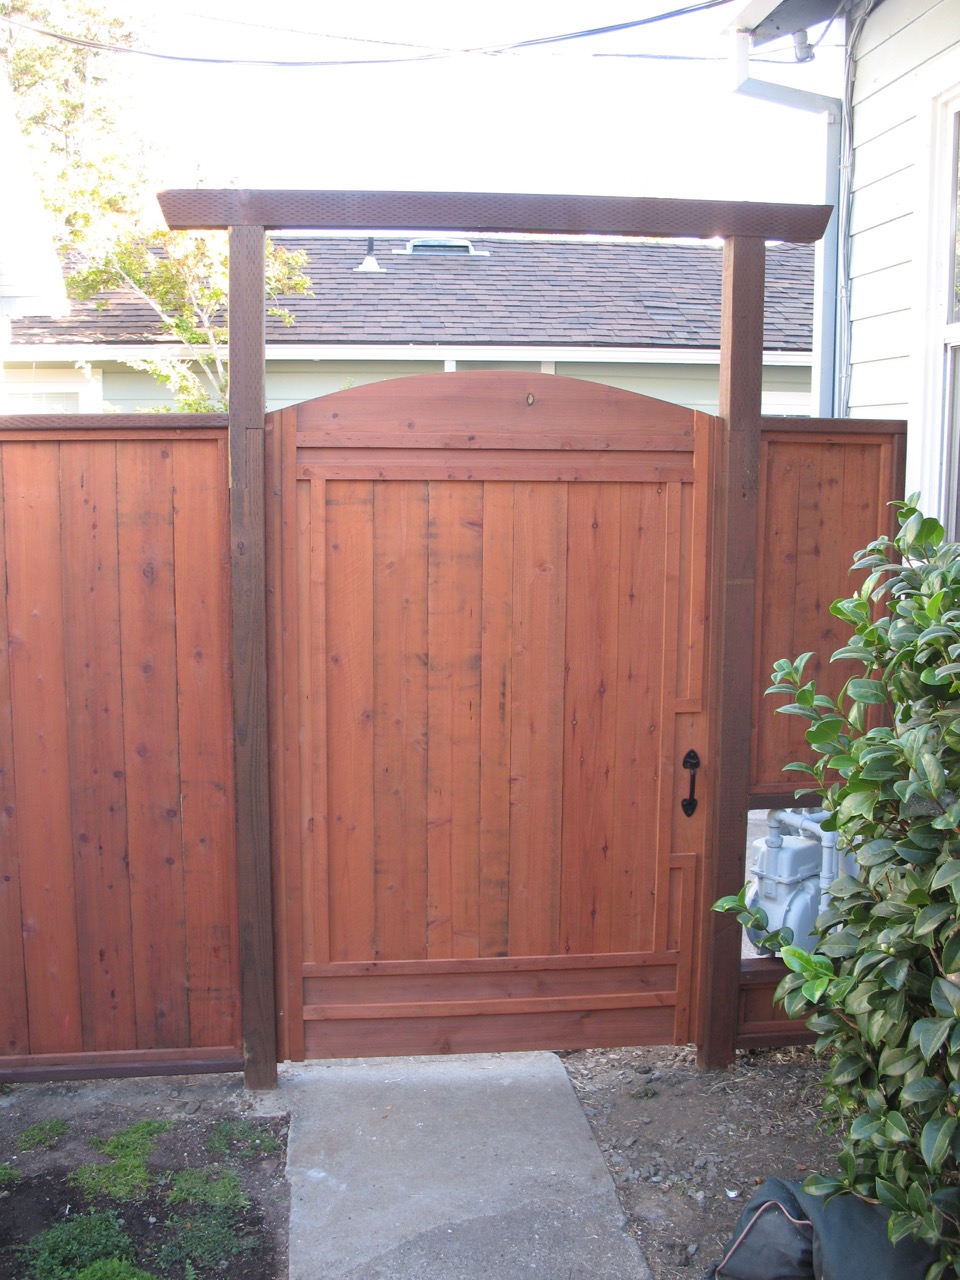 Backyard entry gate inside view